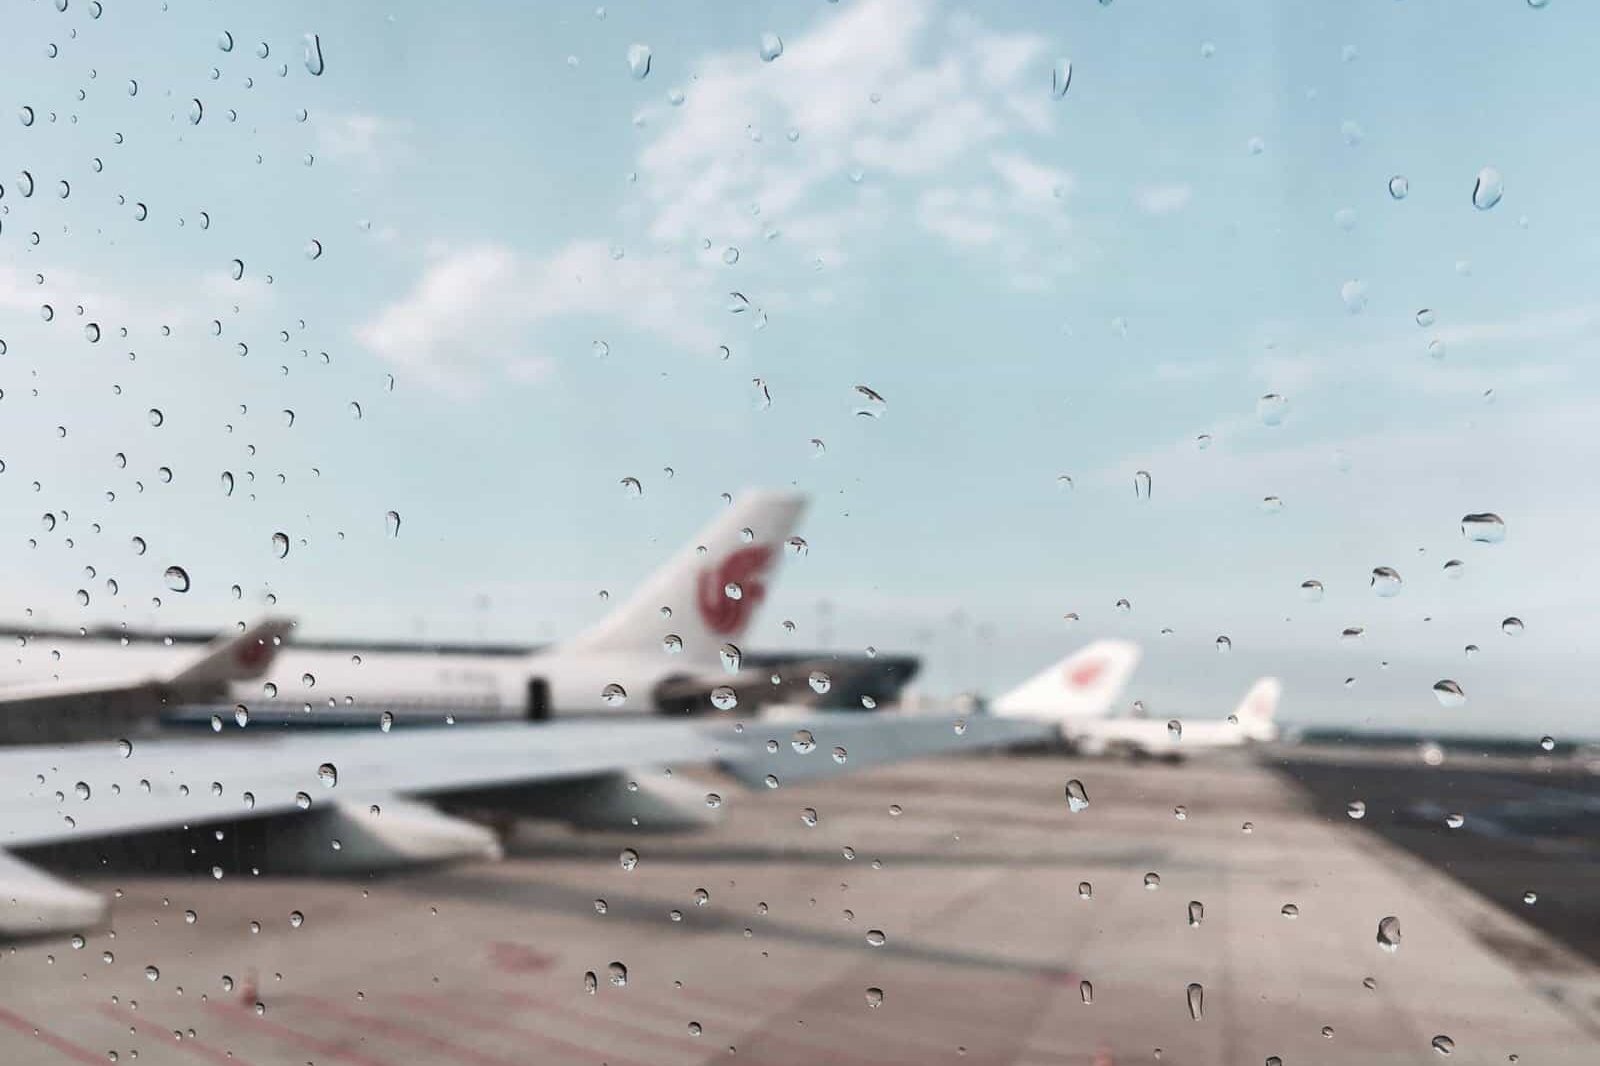 ID90 Airplanes through wet window